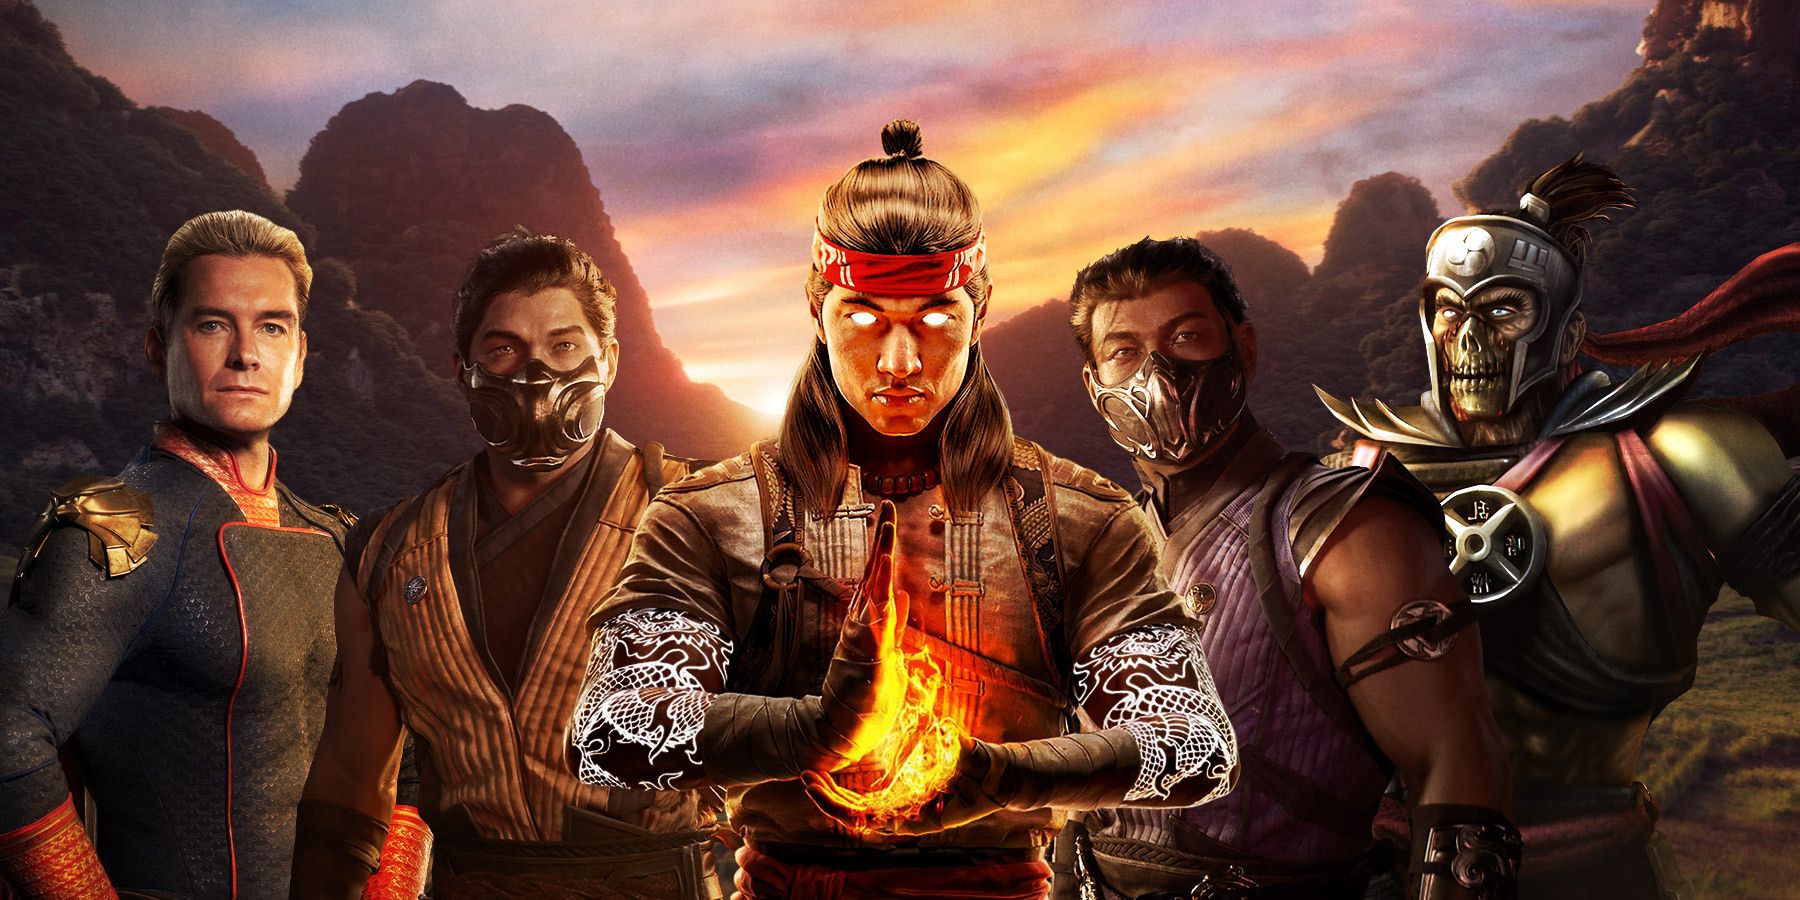 leak reveals Kombat Pack DLC characters for Mortal Kombat 1 - Xfire